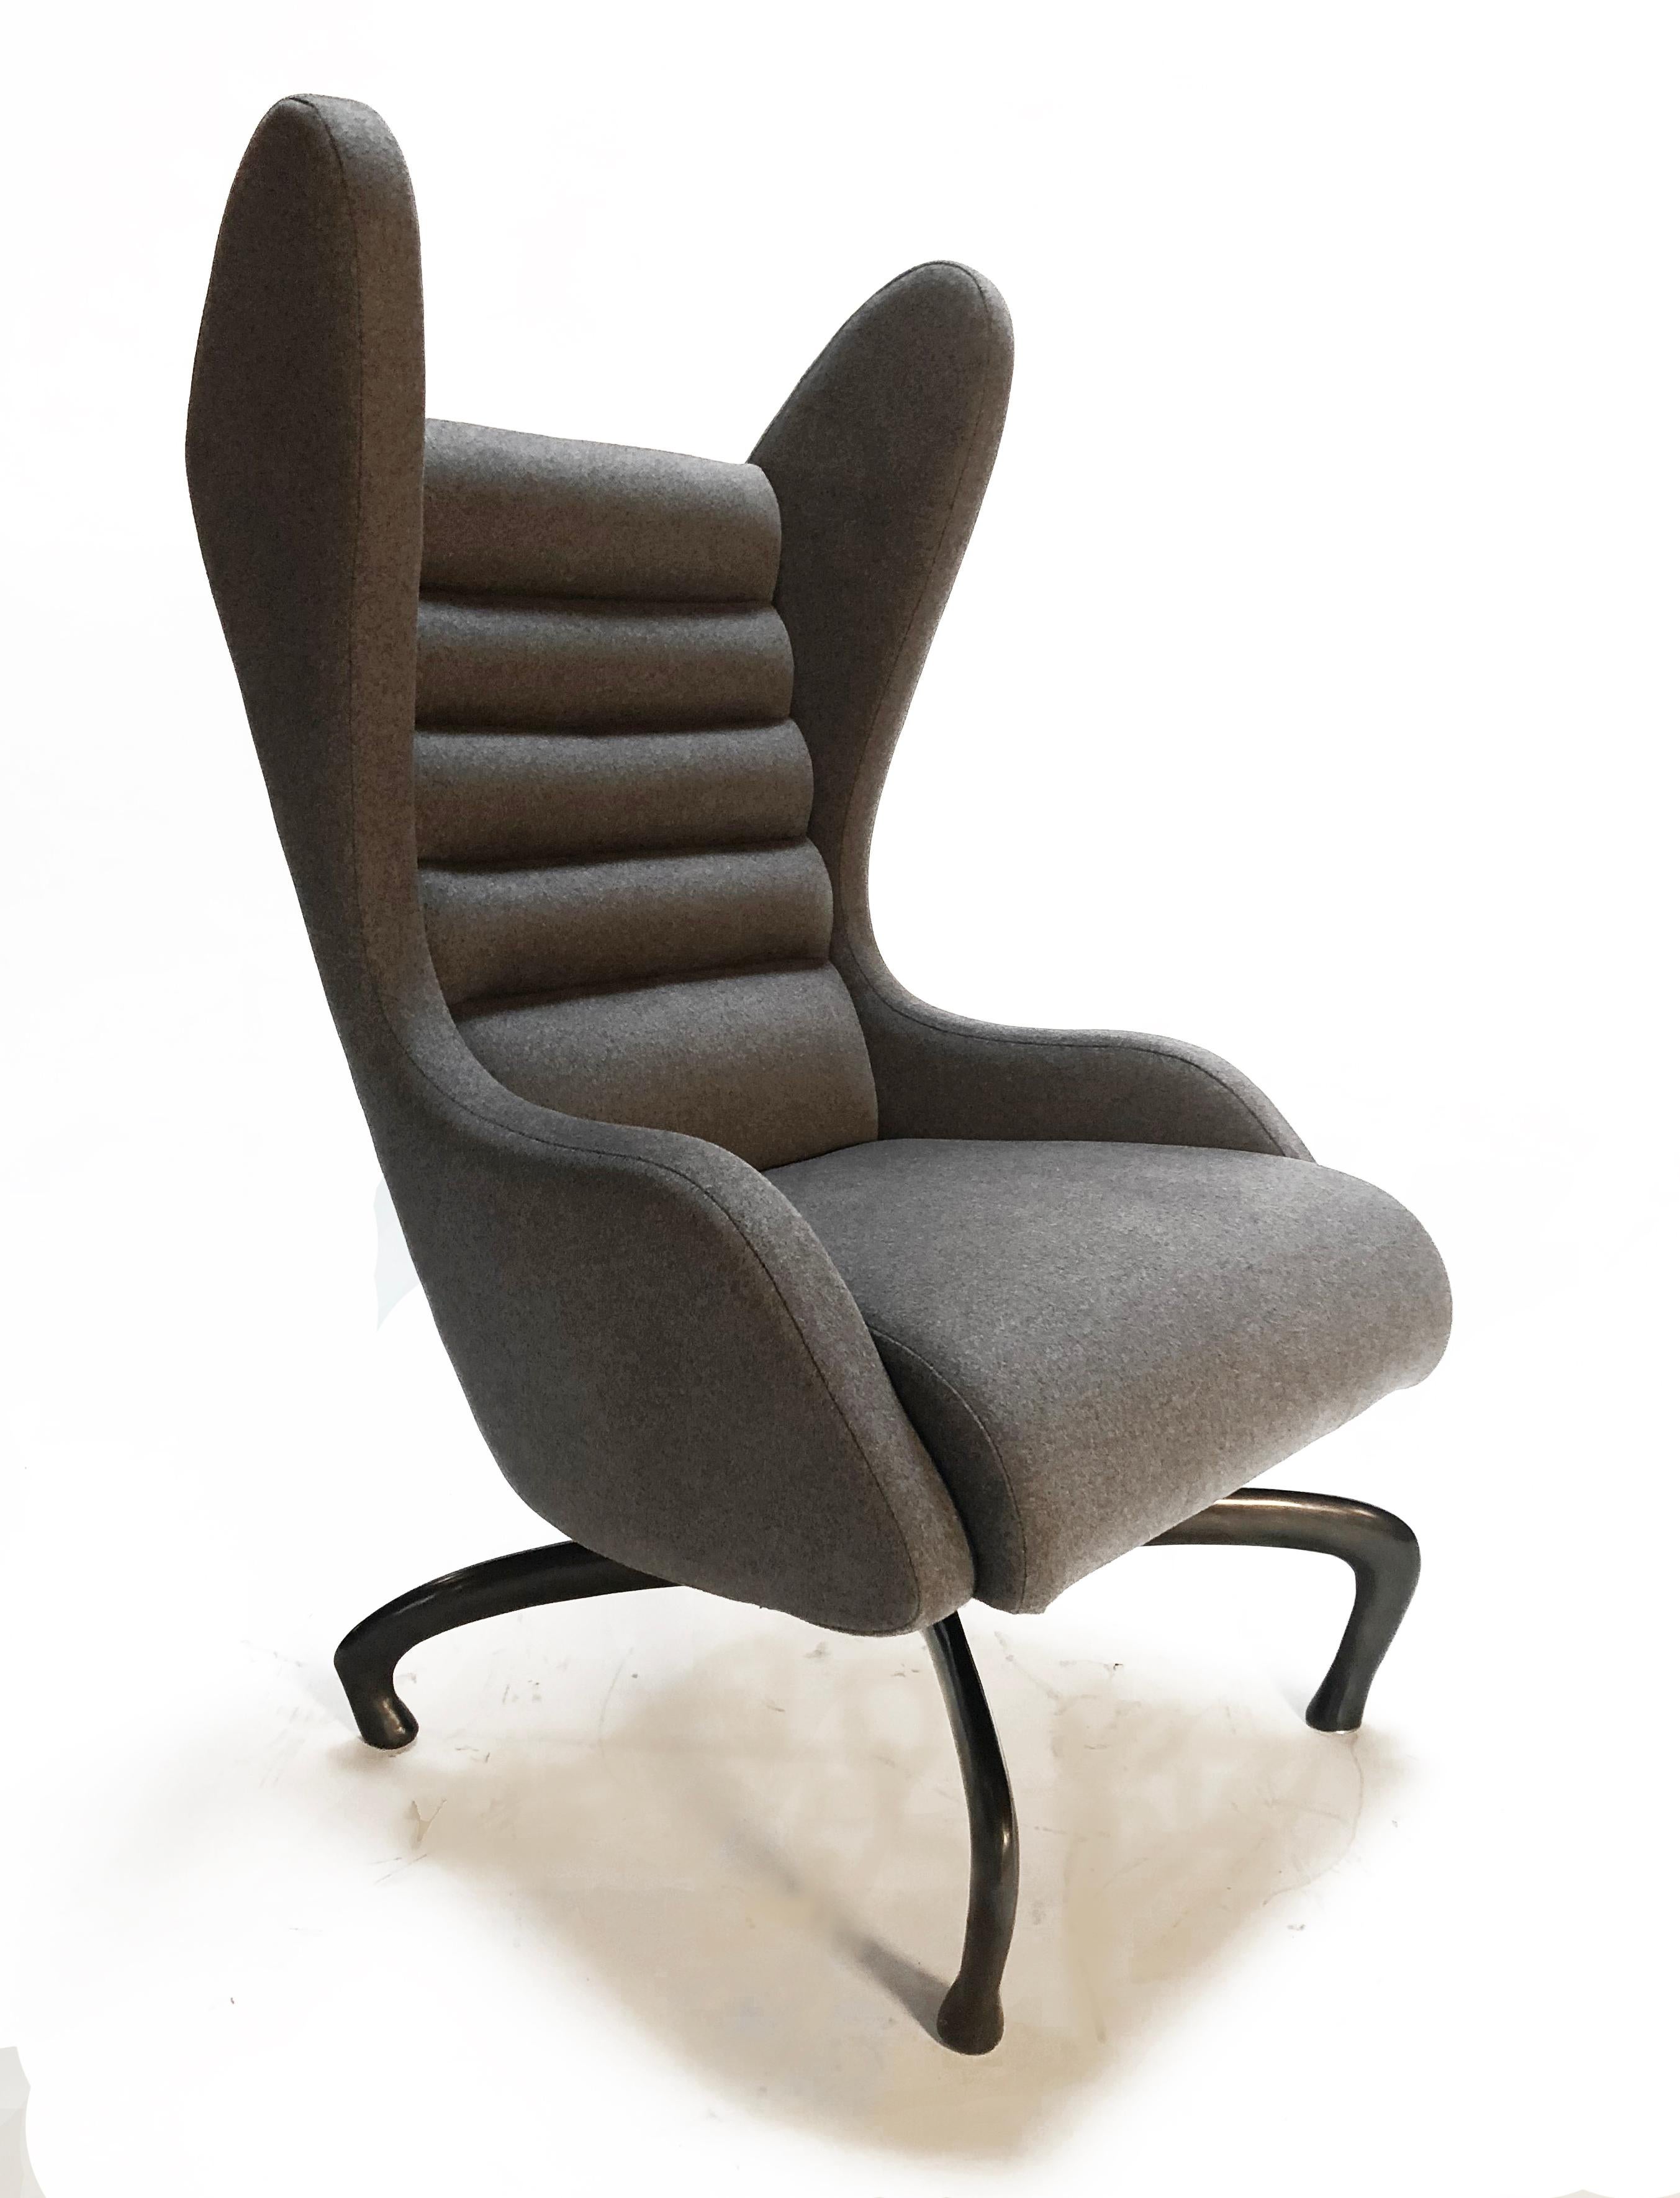 Cantering Lounge Chair, Leather / Cast Aluminium, Jordan Mozer, USA, 2003-2018 For Sale 10